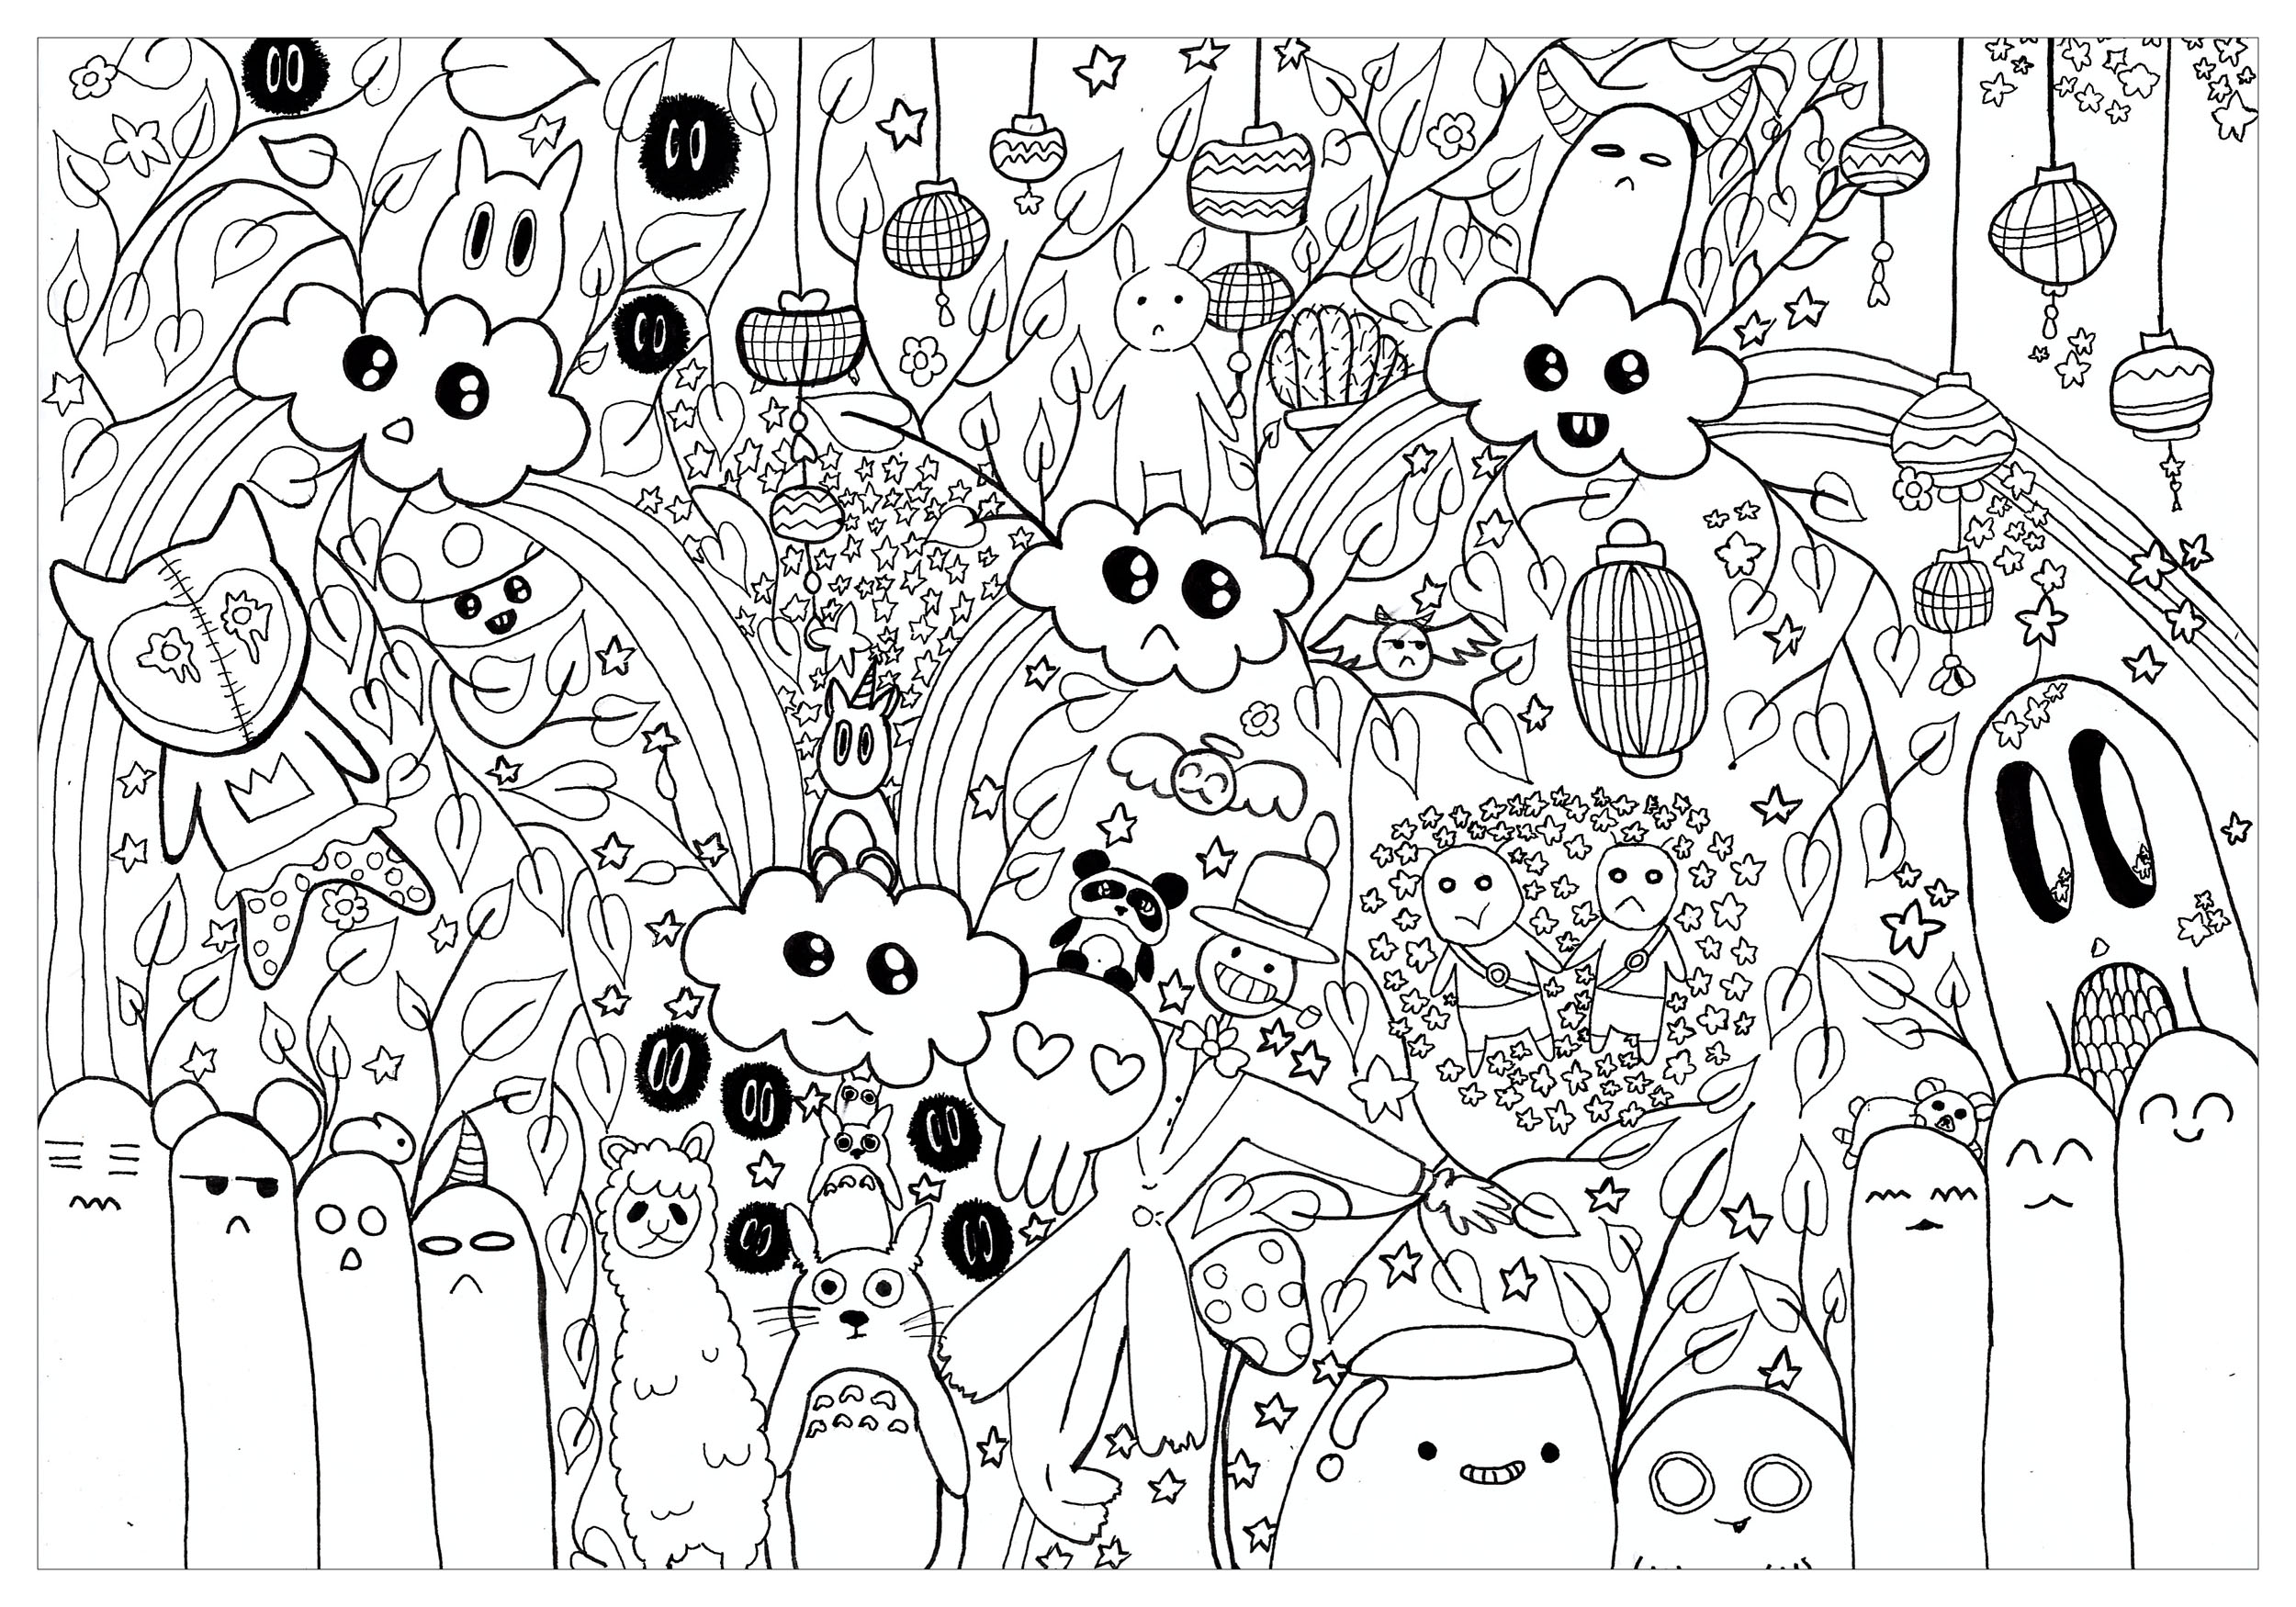 Doodle inspired by the World of Hayao Miyazaki / Ghibli studio, with some kawaii characters, Artist : Chloe